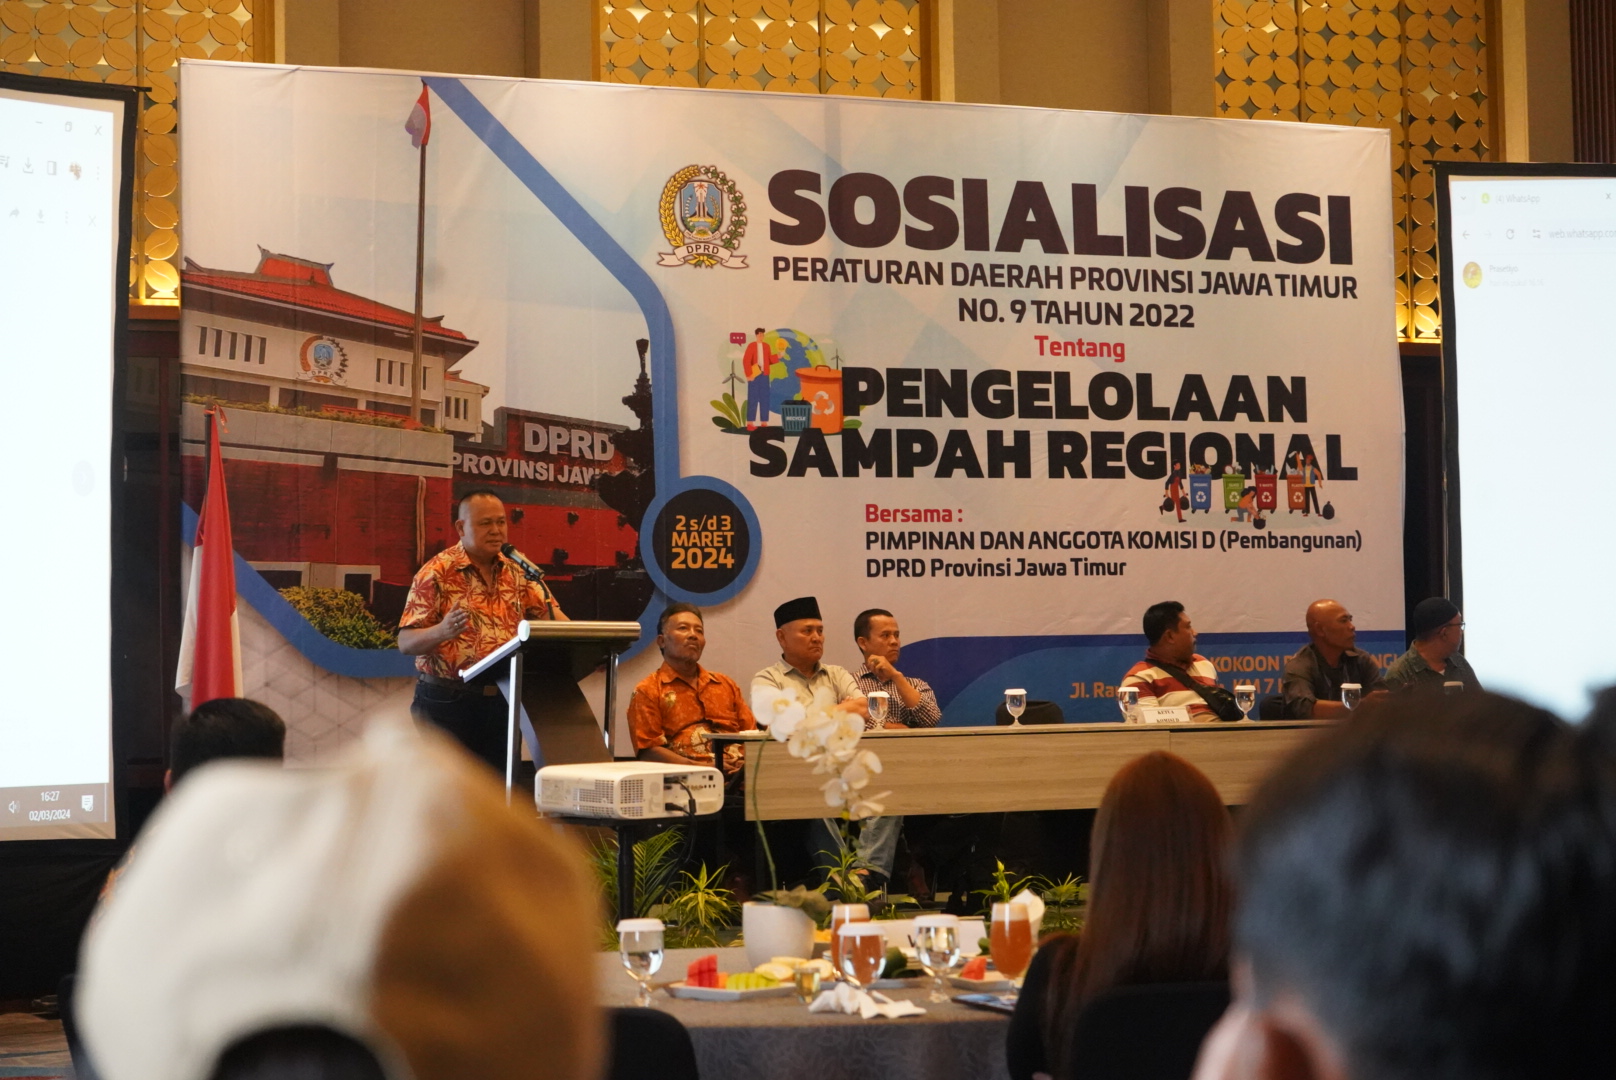 Ketua Komisi D DPRD Provinsi Jawa Timur Agung Mulyono mendorong Pemprov Jawa Timur intens melakukan edukasi terkait pengelolaan sampah ke masyarakat Jawa Timur.